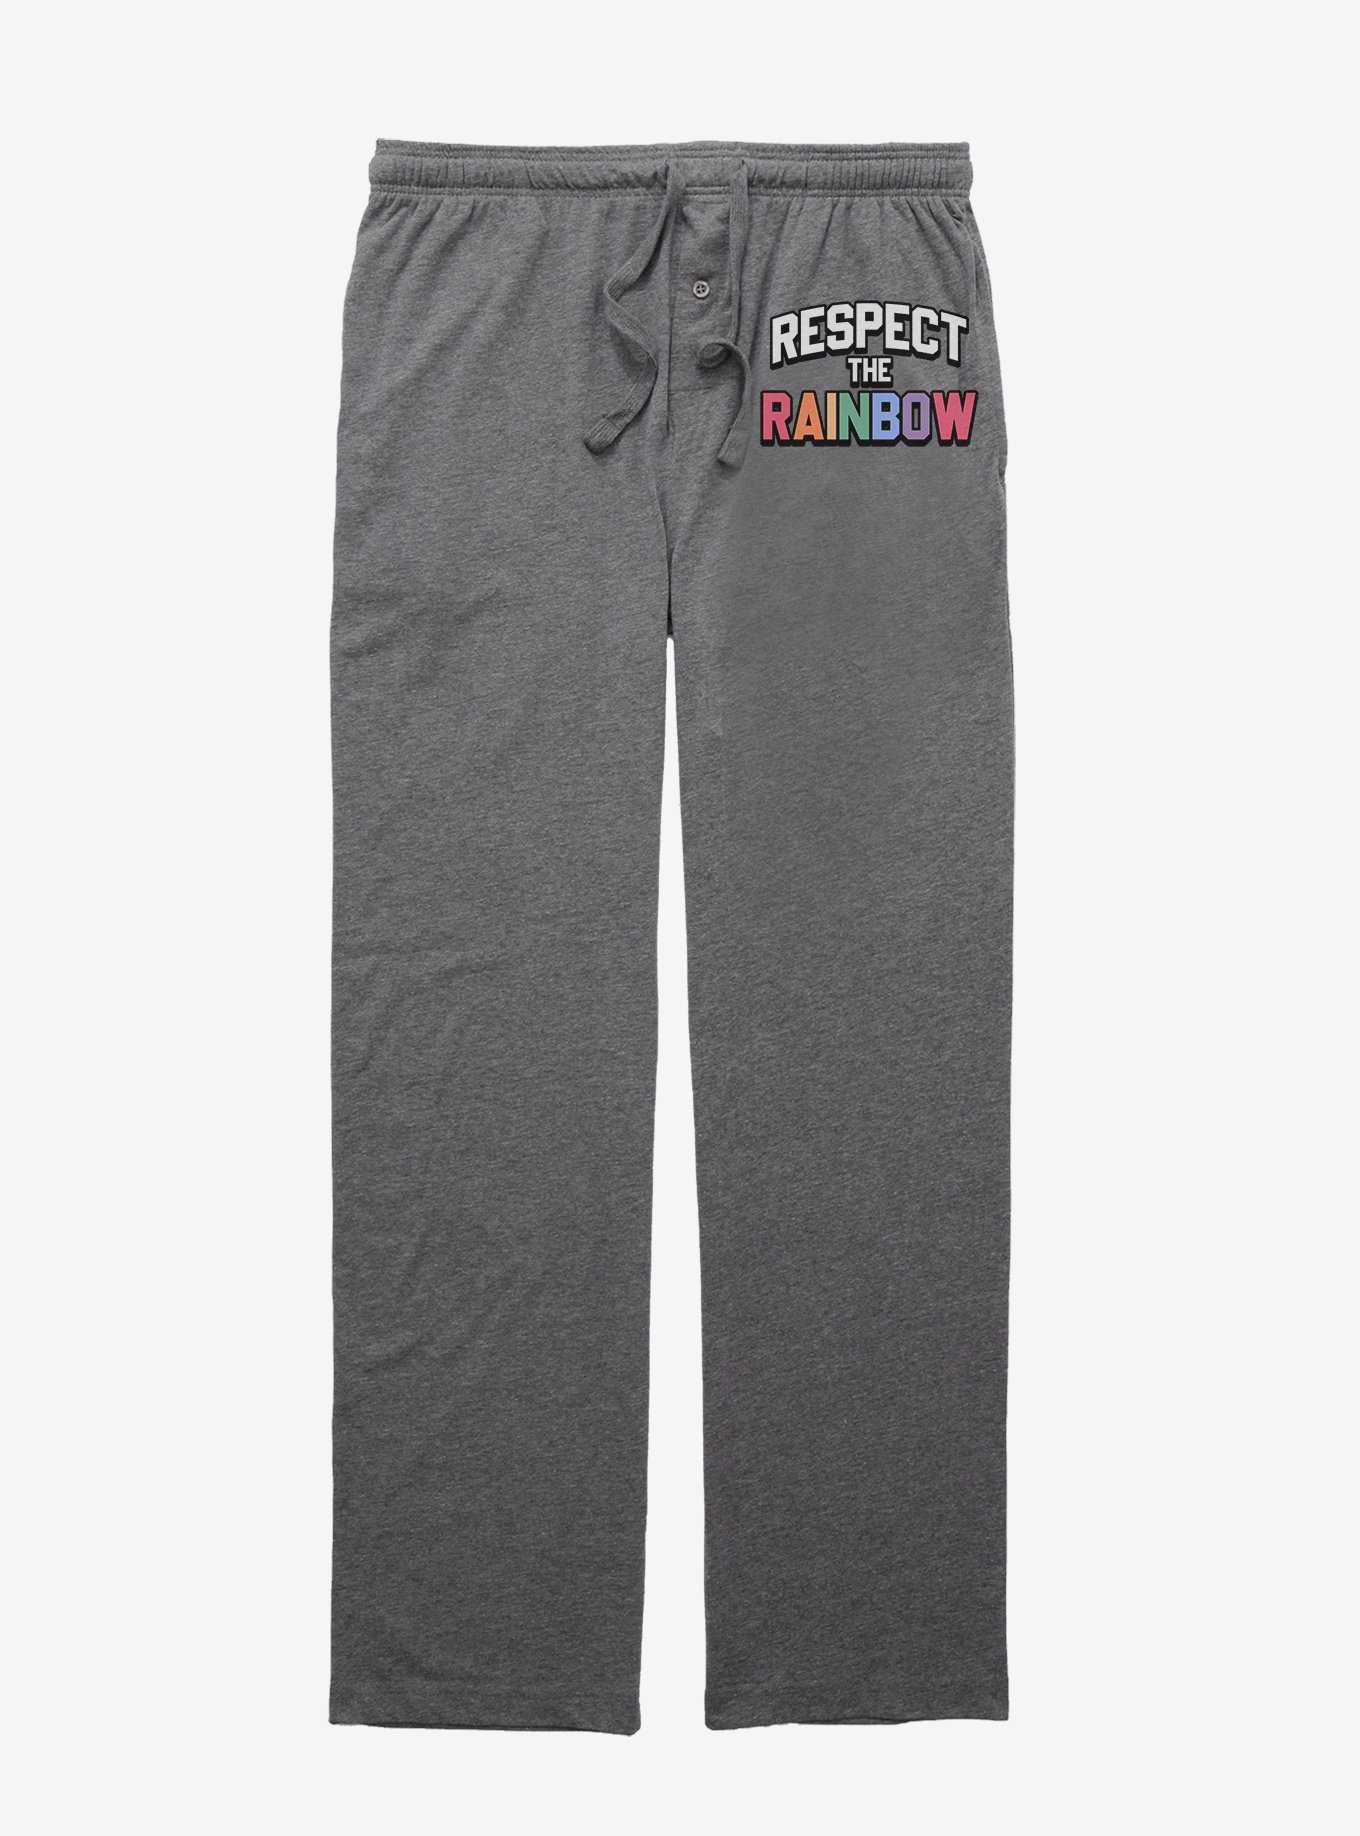 Respect The Rainbow Pajama Pants, , hi-res